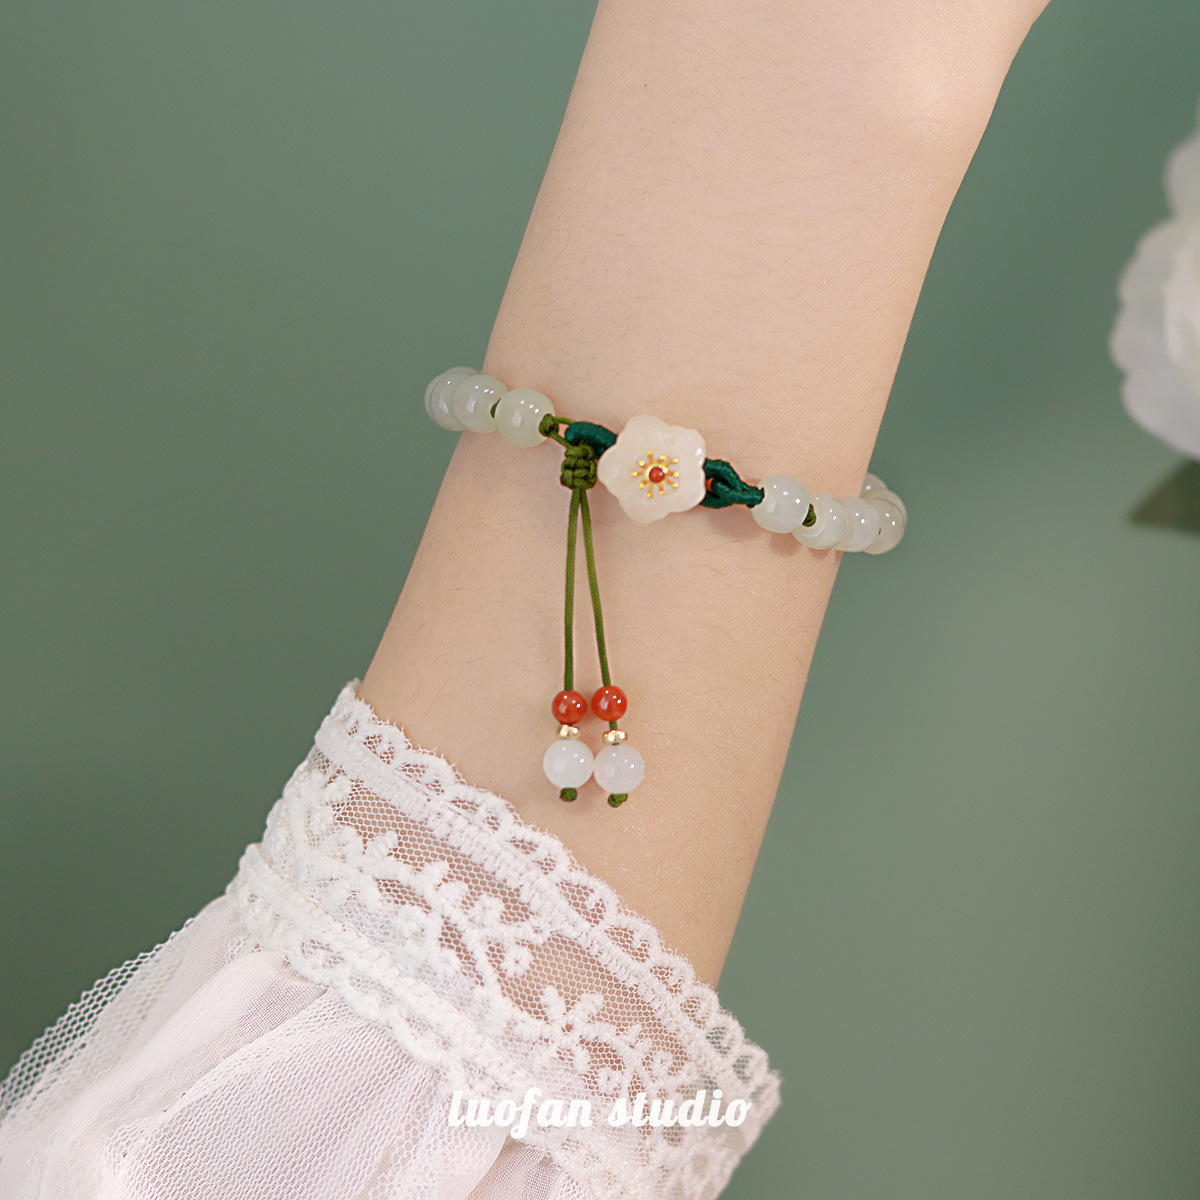 Tiktok Same Style Jade round Beads Small Peach Blossom Woven Bracelet Female Special-Interest Design Student Girlfriend Gifts round Beads Bracelet